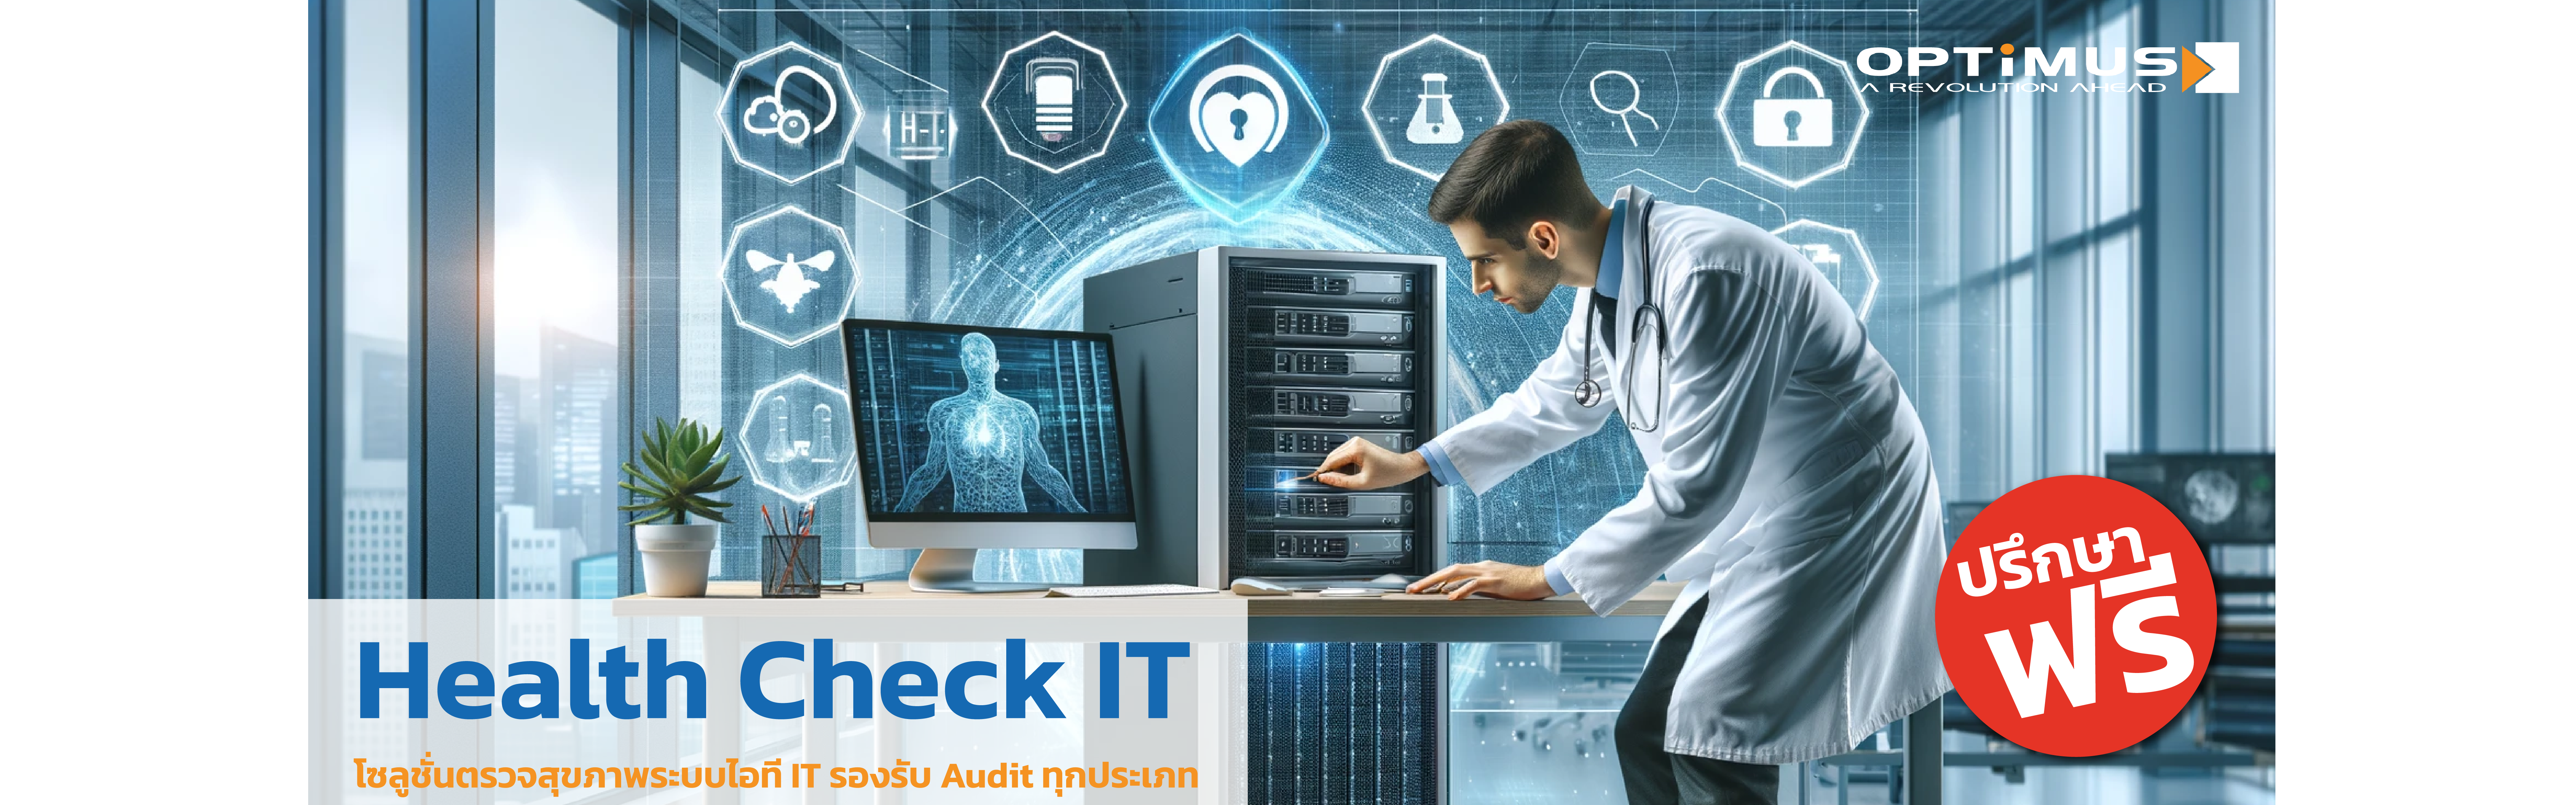 Health Check IT ตรวจสุขภาพระบบไอที โซลูชั่นหาช่องโหว่ ประเมินความเสี่ยงระบบไอที เตรียมพร้อมสู่ IT Audit ทุกประเภท